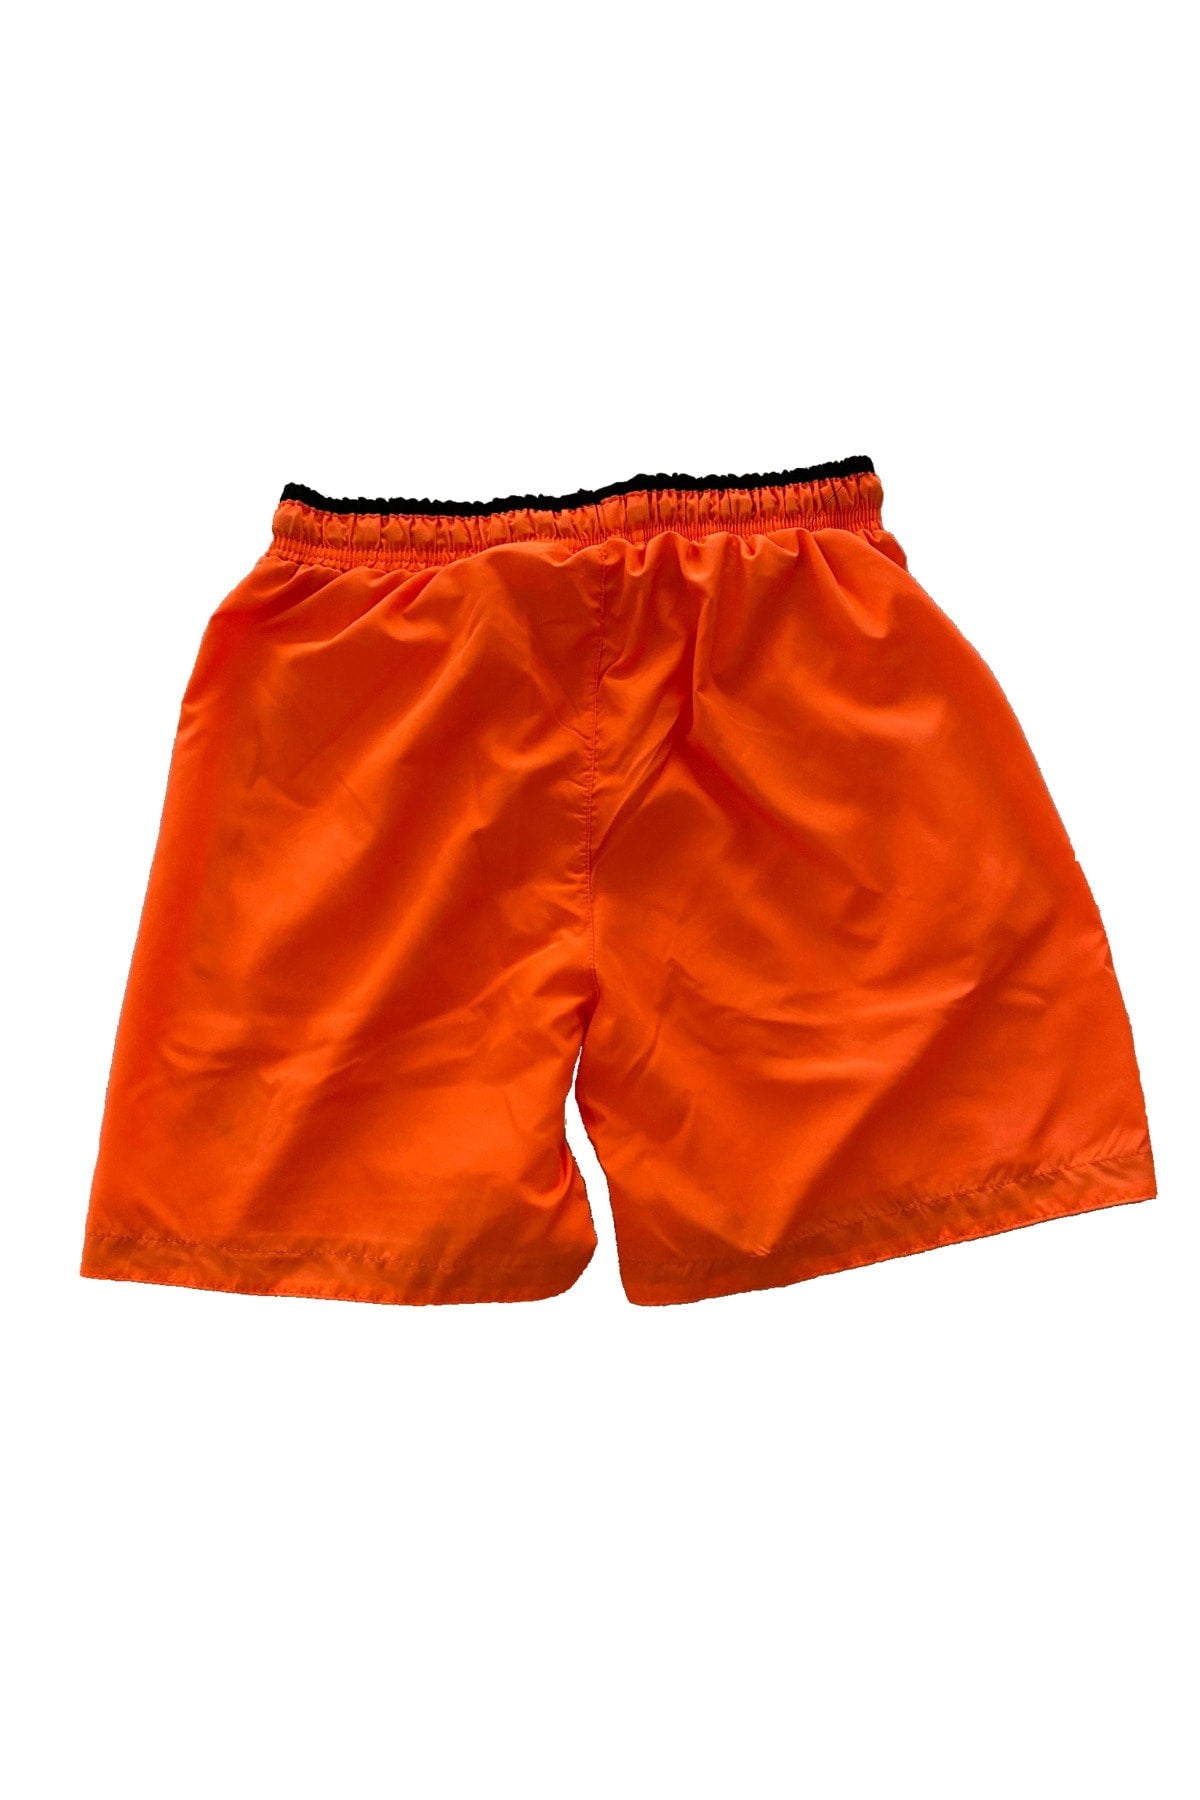 Colorful Pocket Zipper Marine Shorts